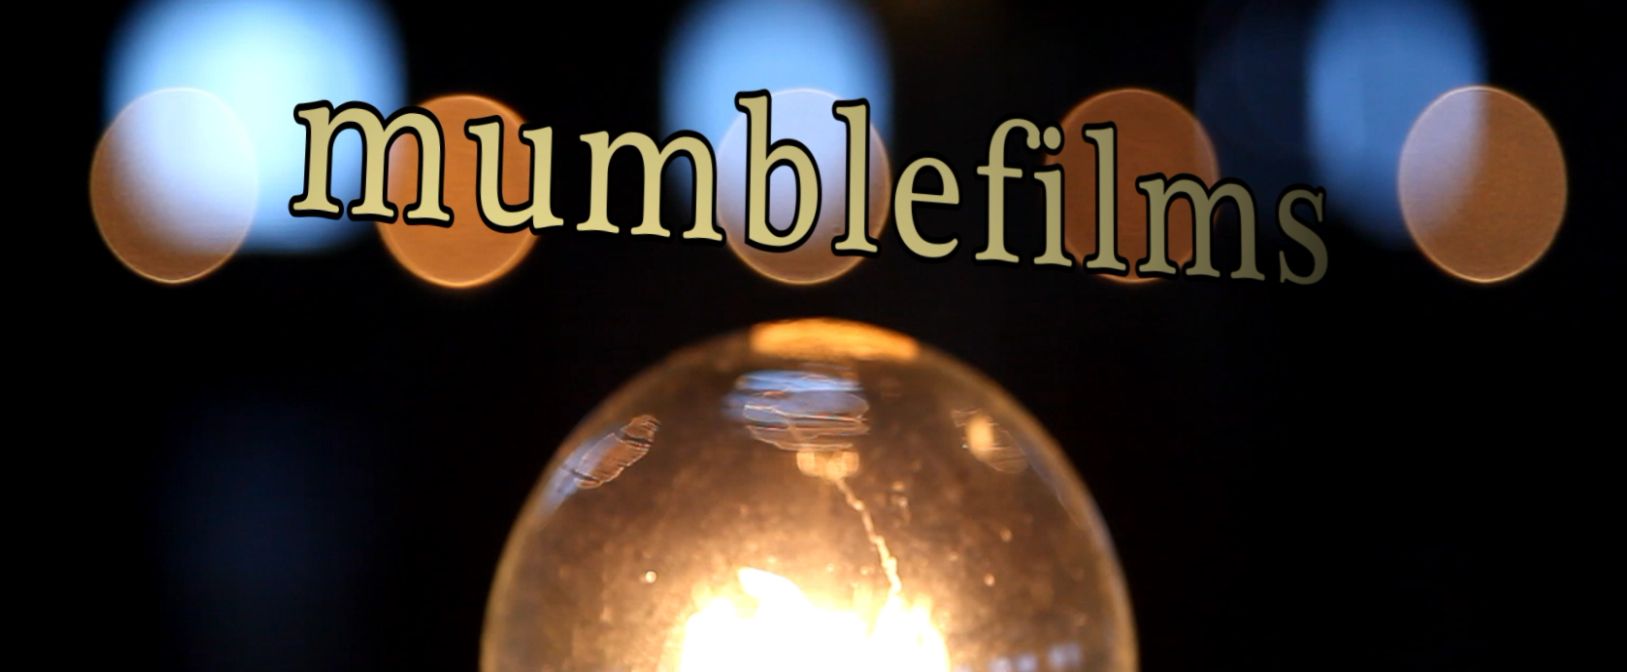 mumblefilms Logo